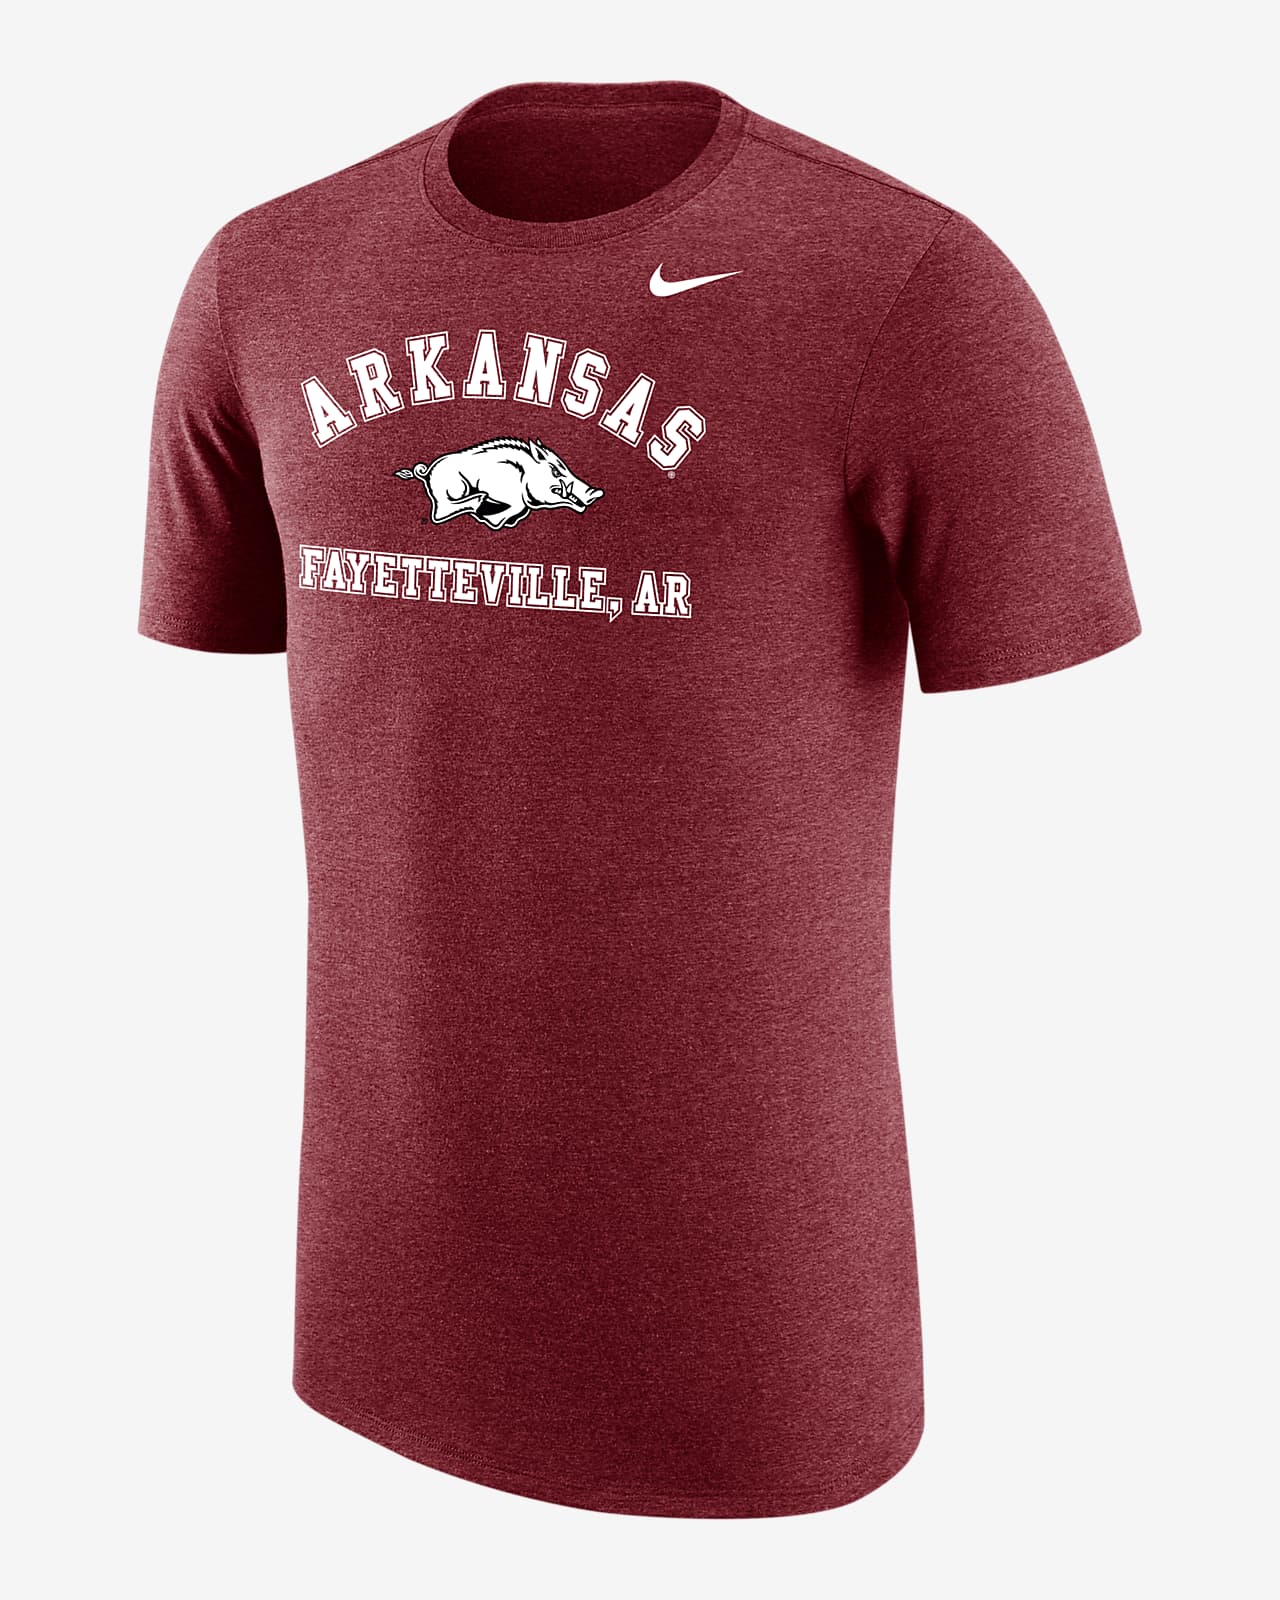 Arkansas Men's Nike College T-Shirt